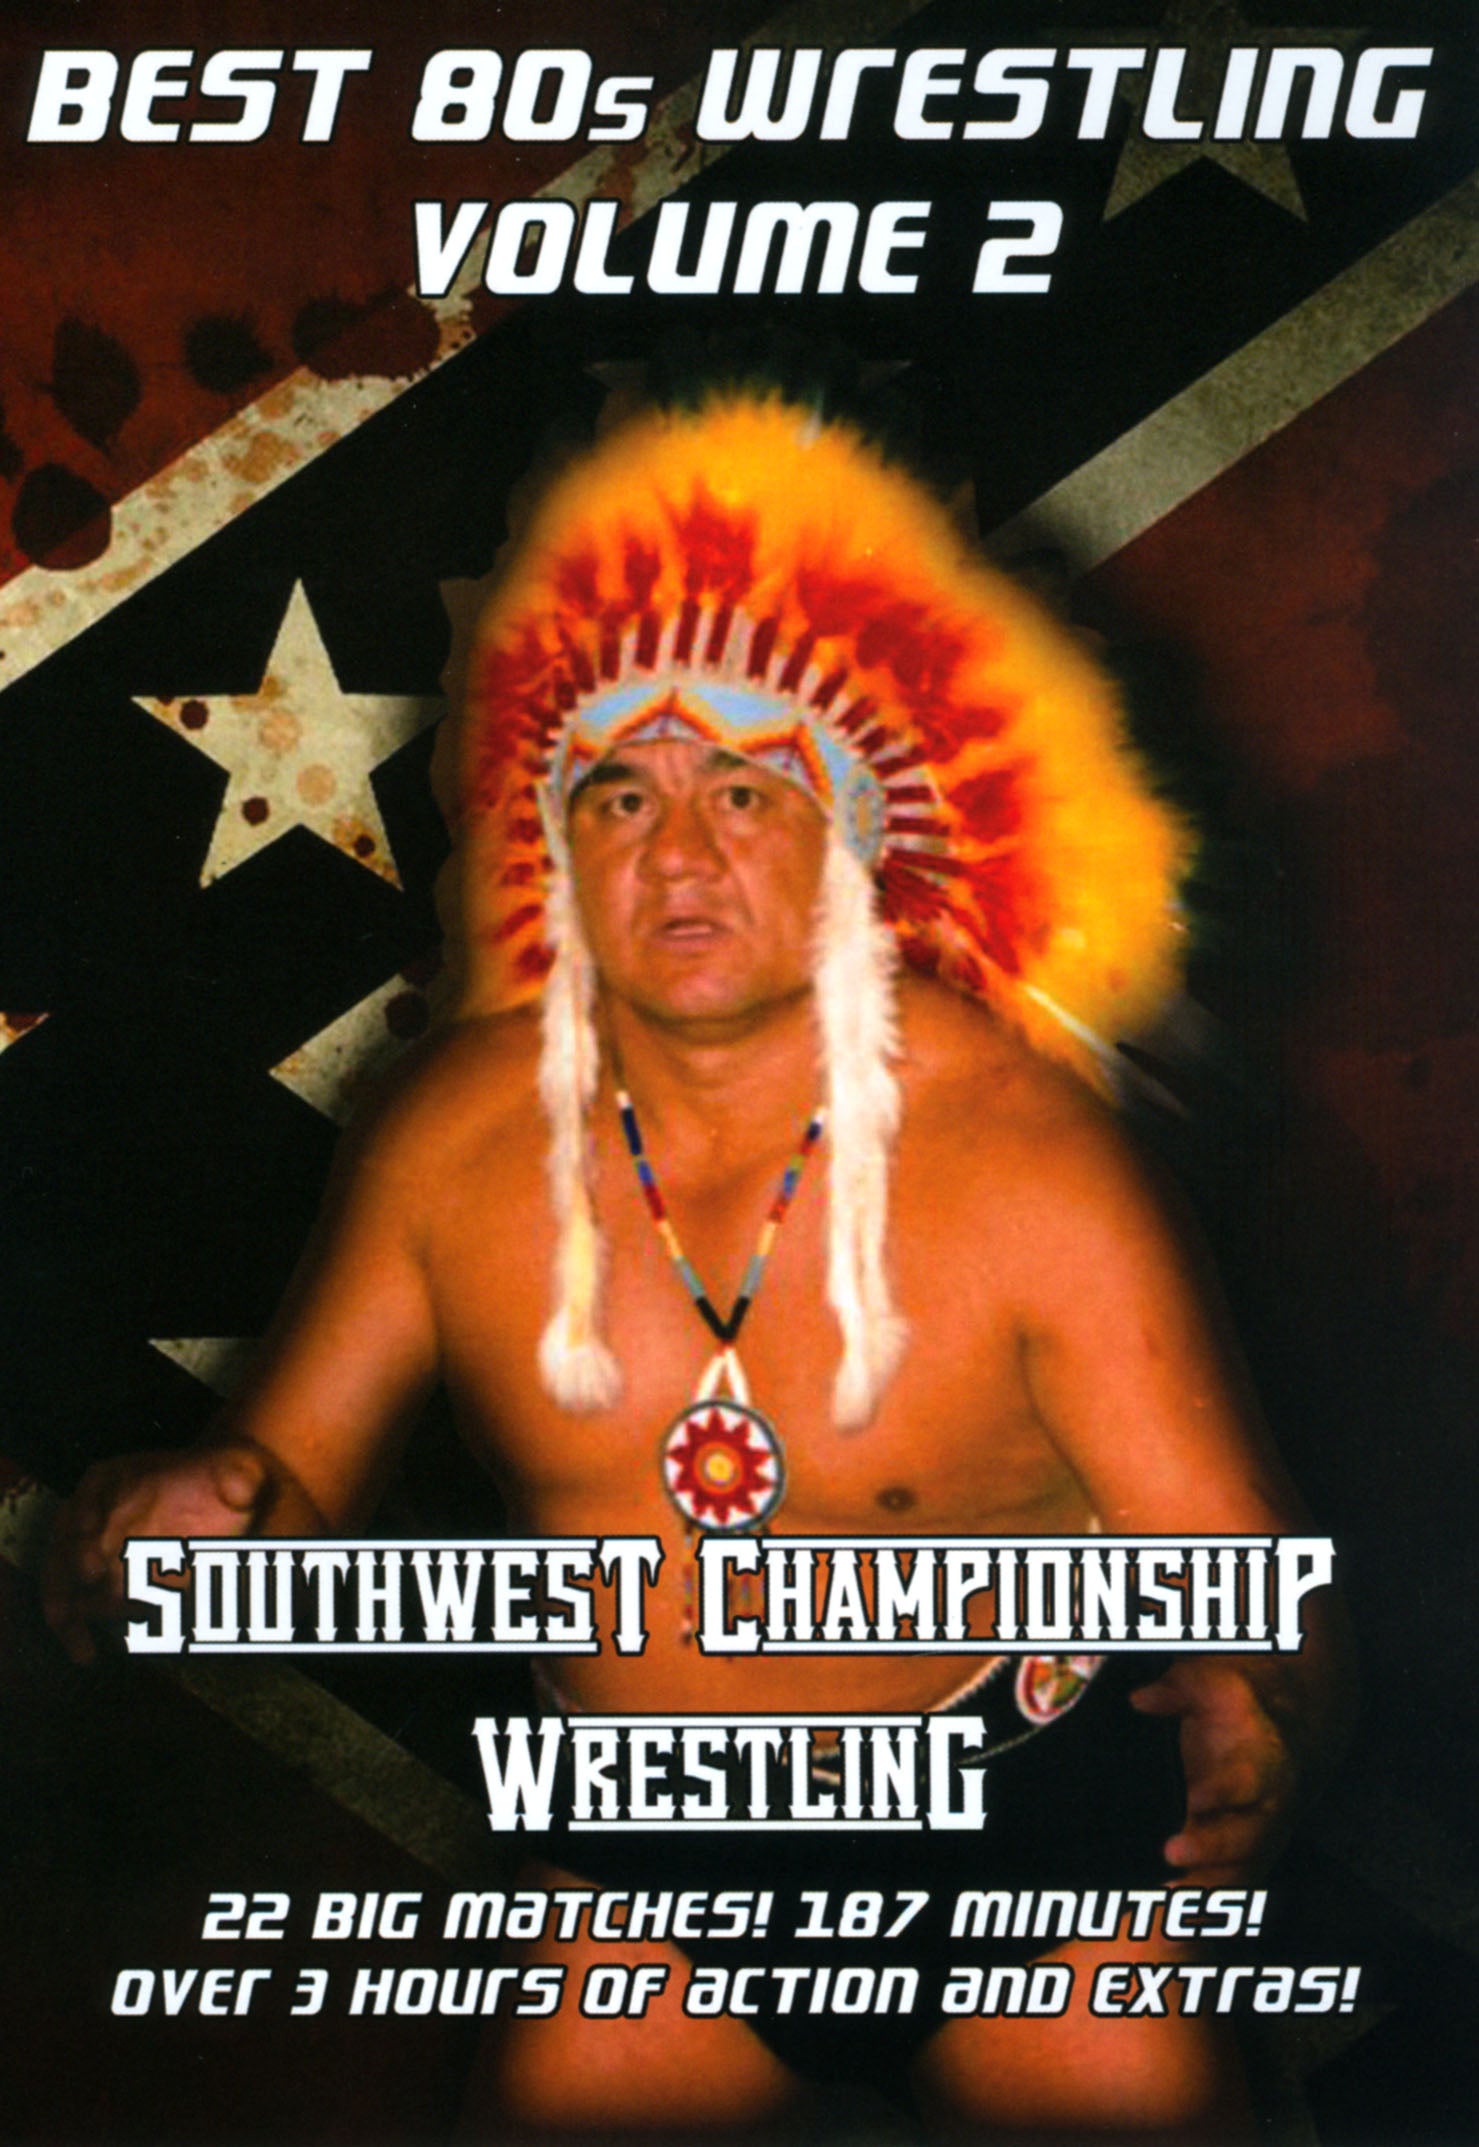 Southwest Championship Wrestling: Best 80s Wrestling, Vol. 2 cover art